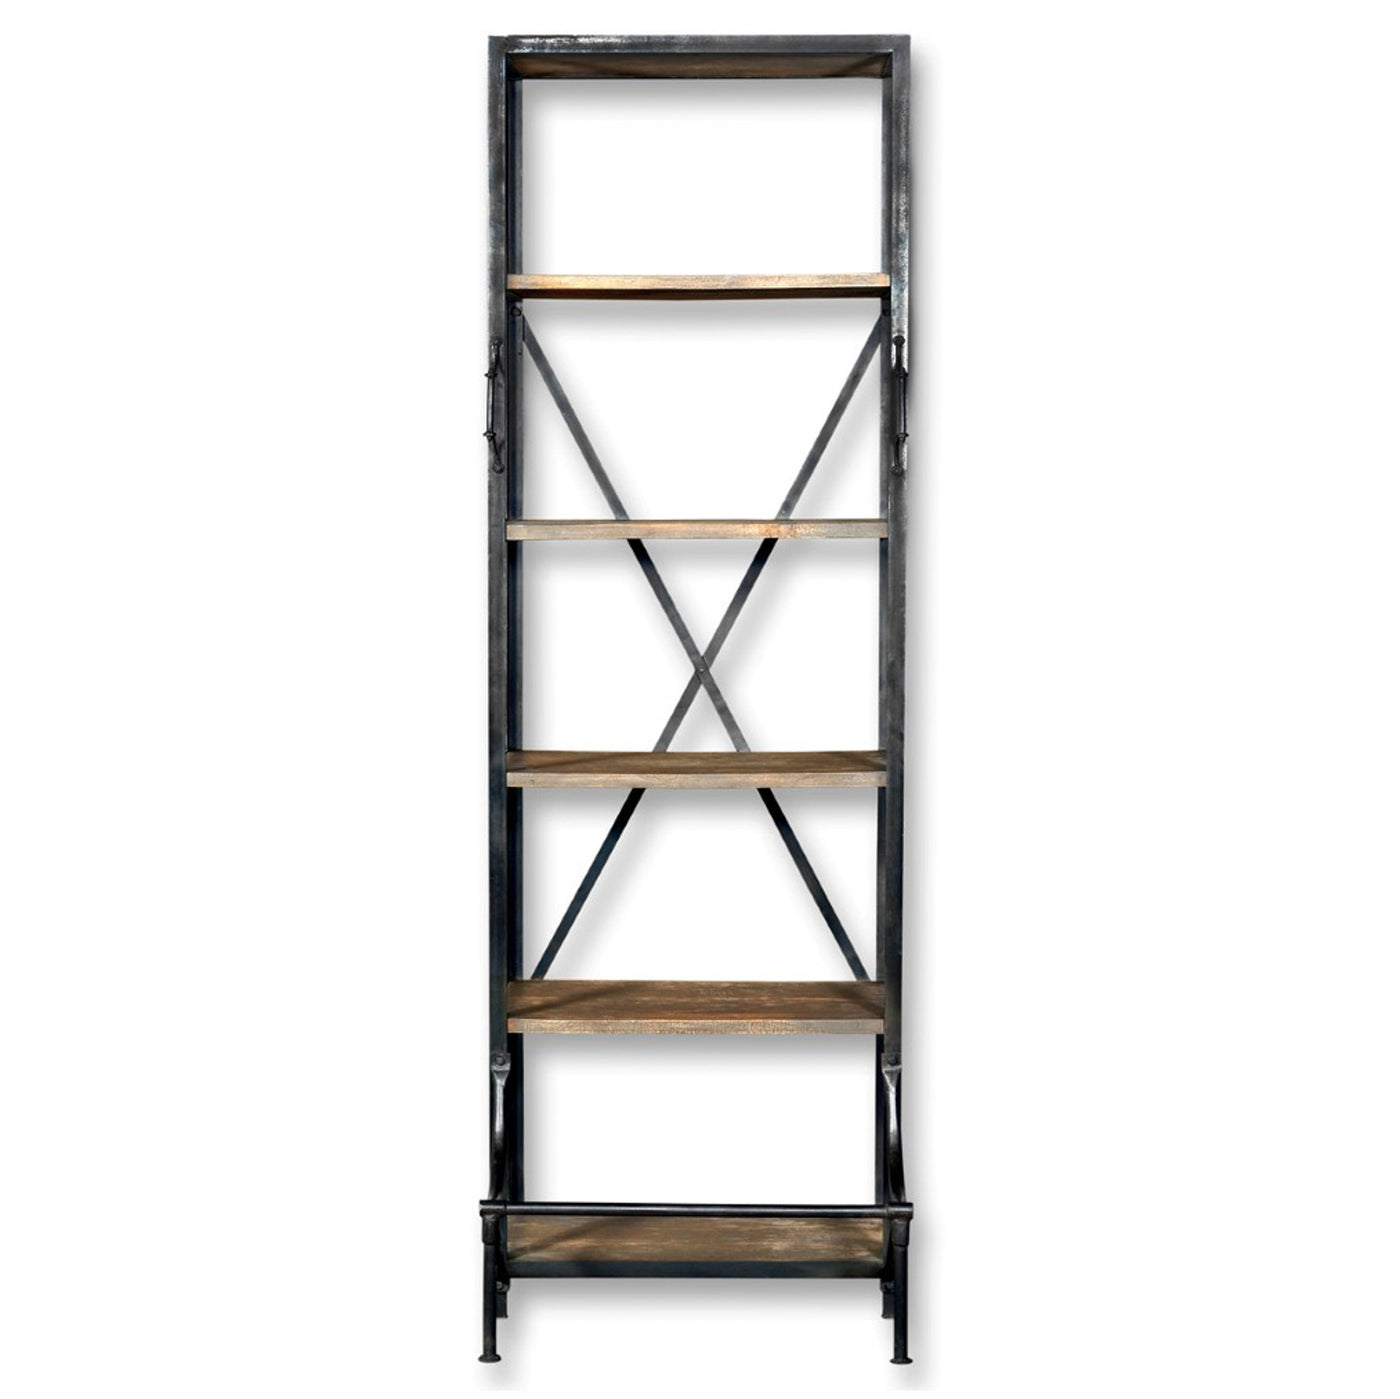 Industrial 5-Shelf Bookshelf Unit in Rustic Mango Wood Finish